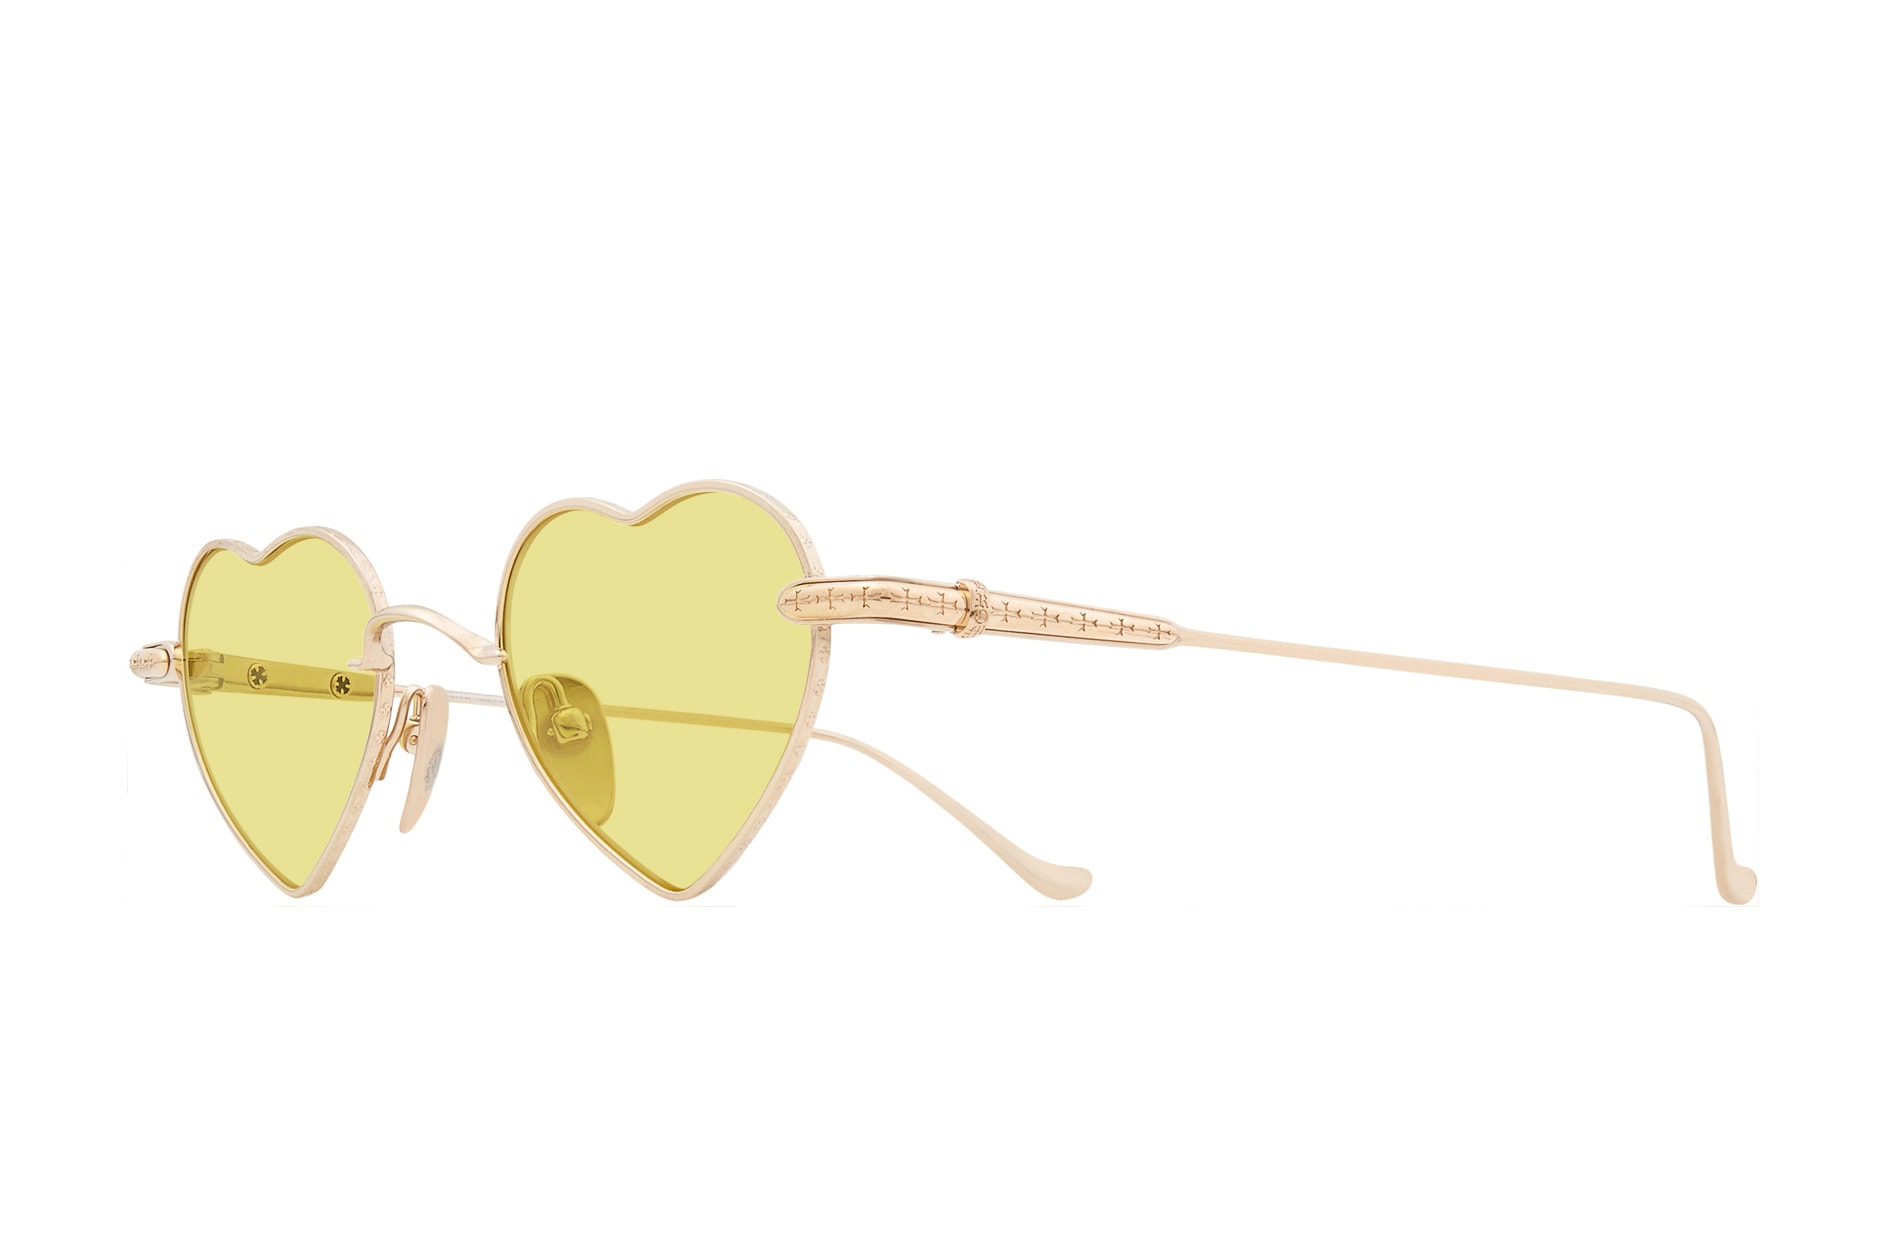 Chrome Hearts Sunglasses Heart Shape Sunnies Shades Accessories Love Yellow Pink Black Brown Frame Design